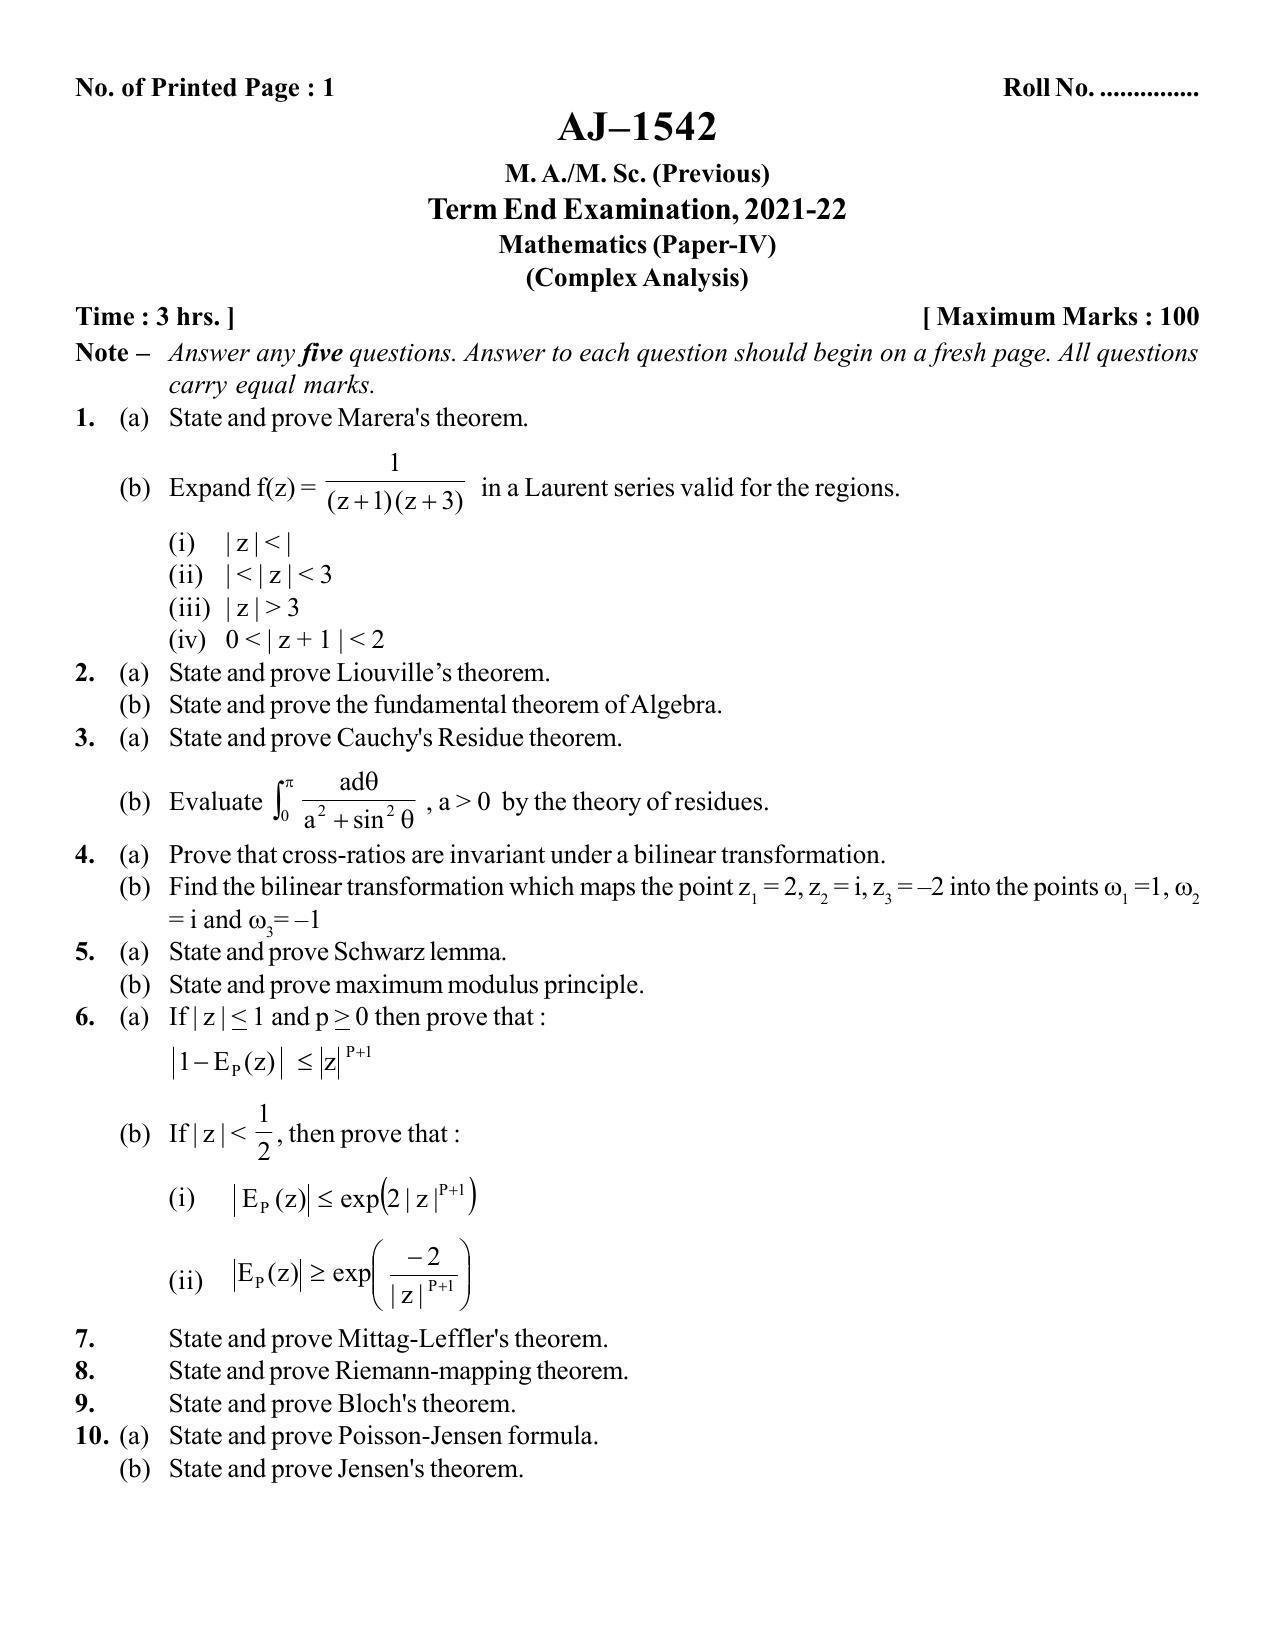 Bilaspur University Question Paper 2021-2022:M.A (Previous) Mathematics Complex Analysis Paper 1 - Page 1